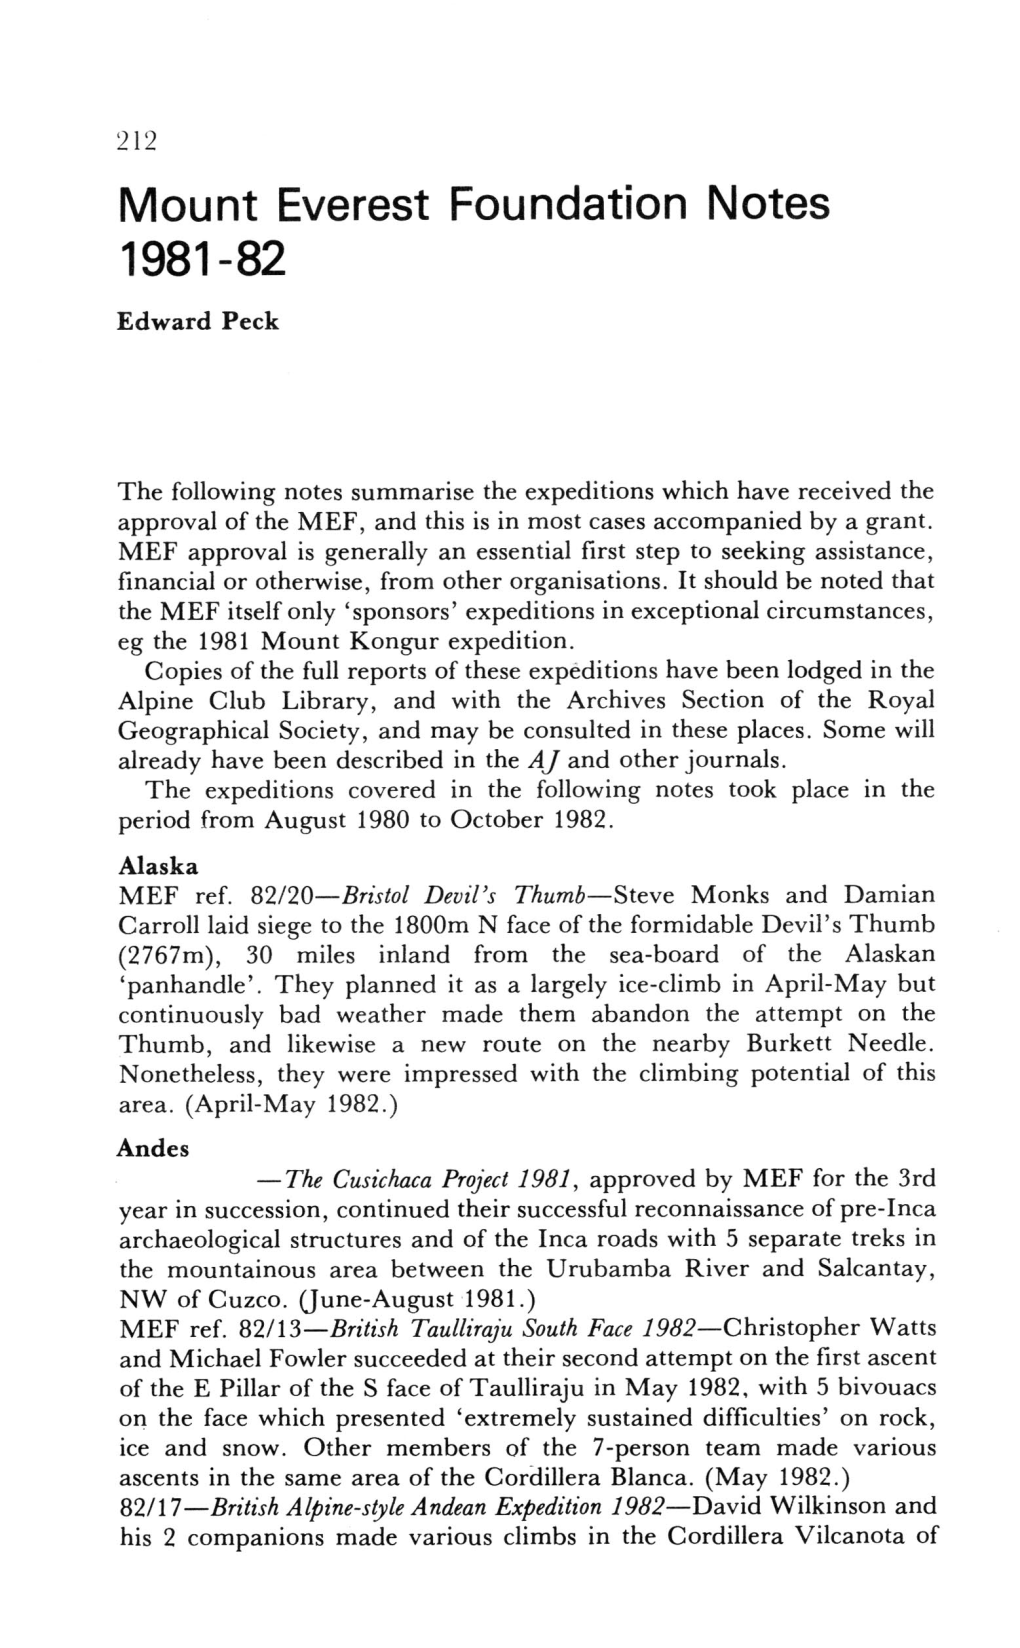 Mount Everest Foundation Notes 1981-82 Edward Peck